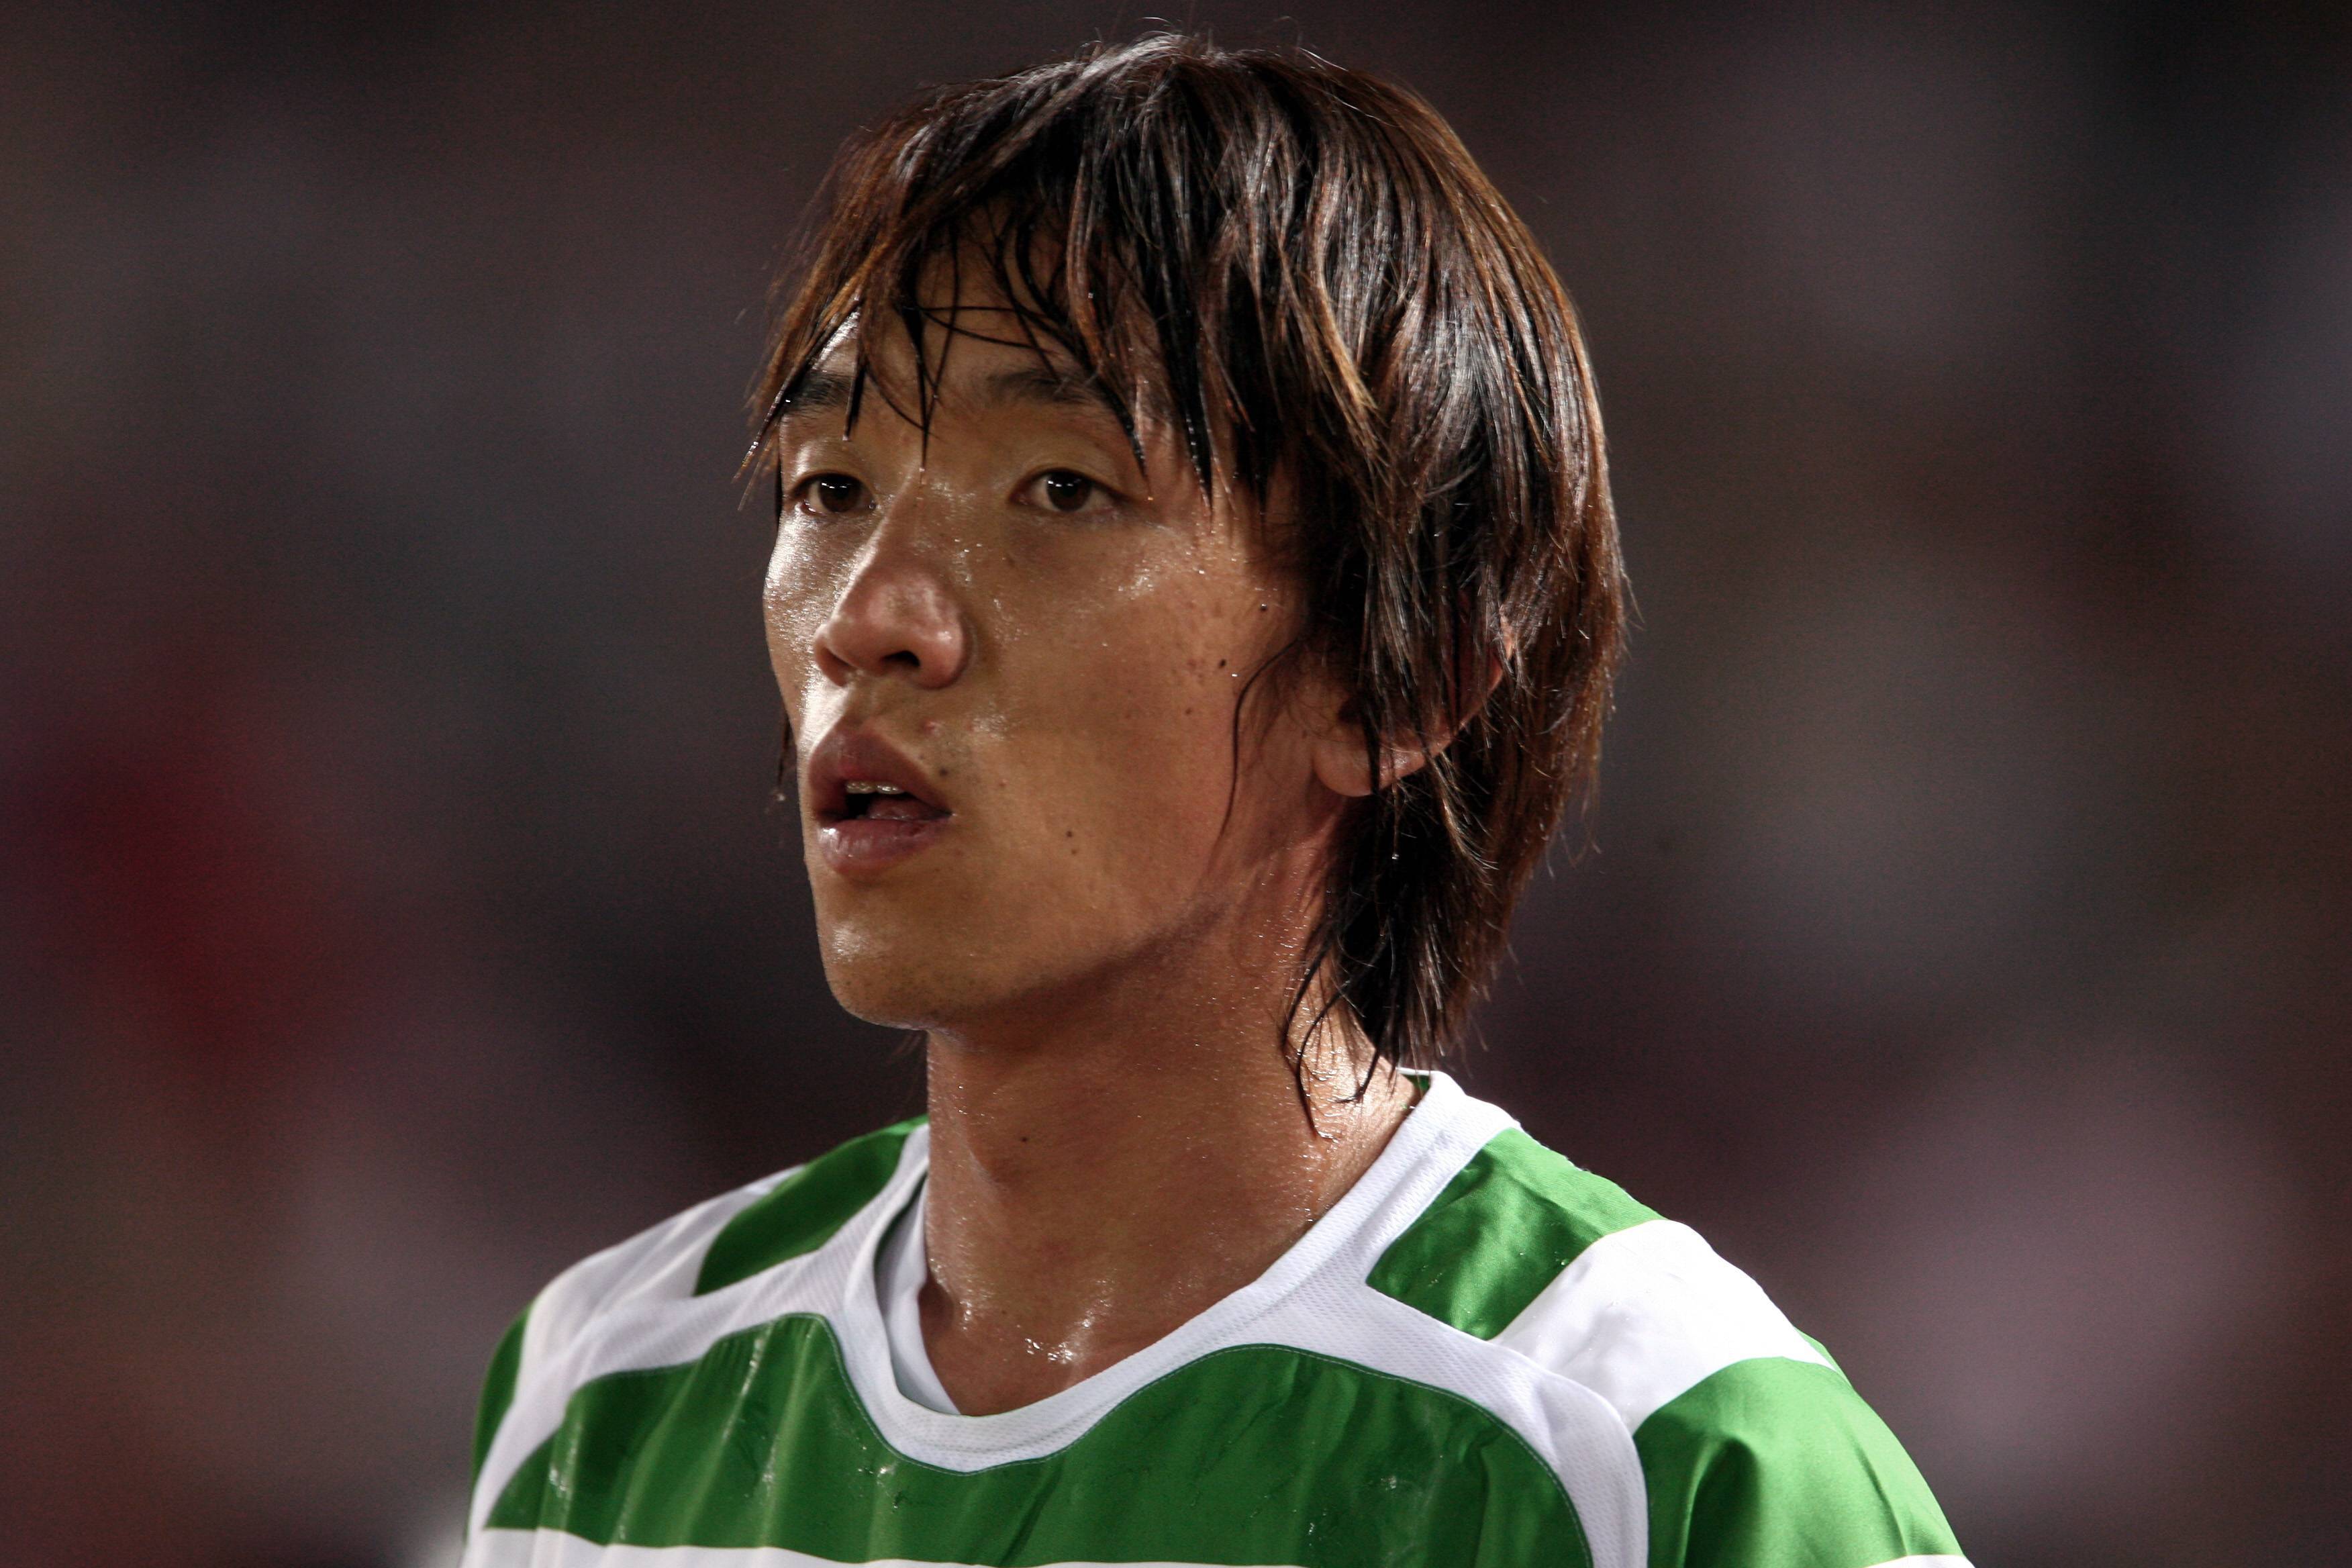 Shunsuke Nakamura - Yokohama F. Marinos, Player Profile